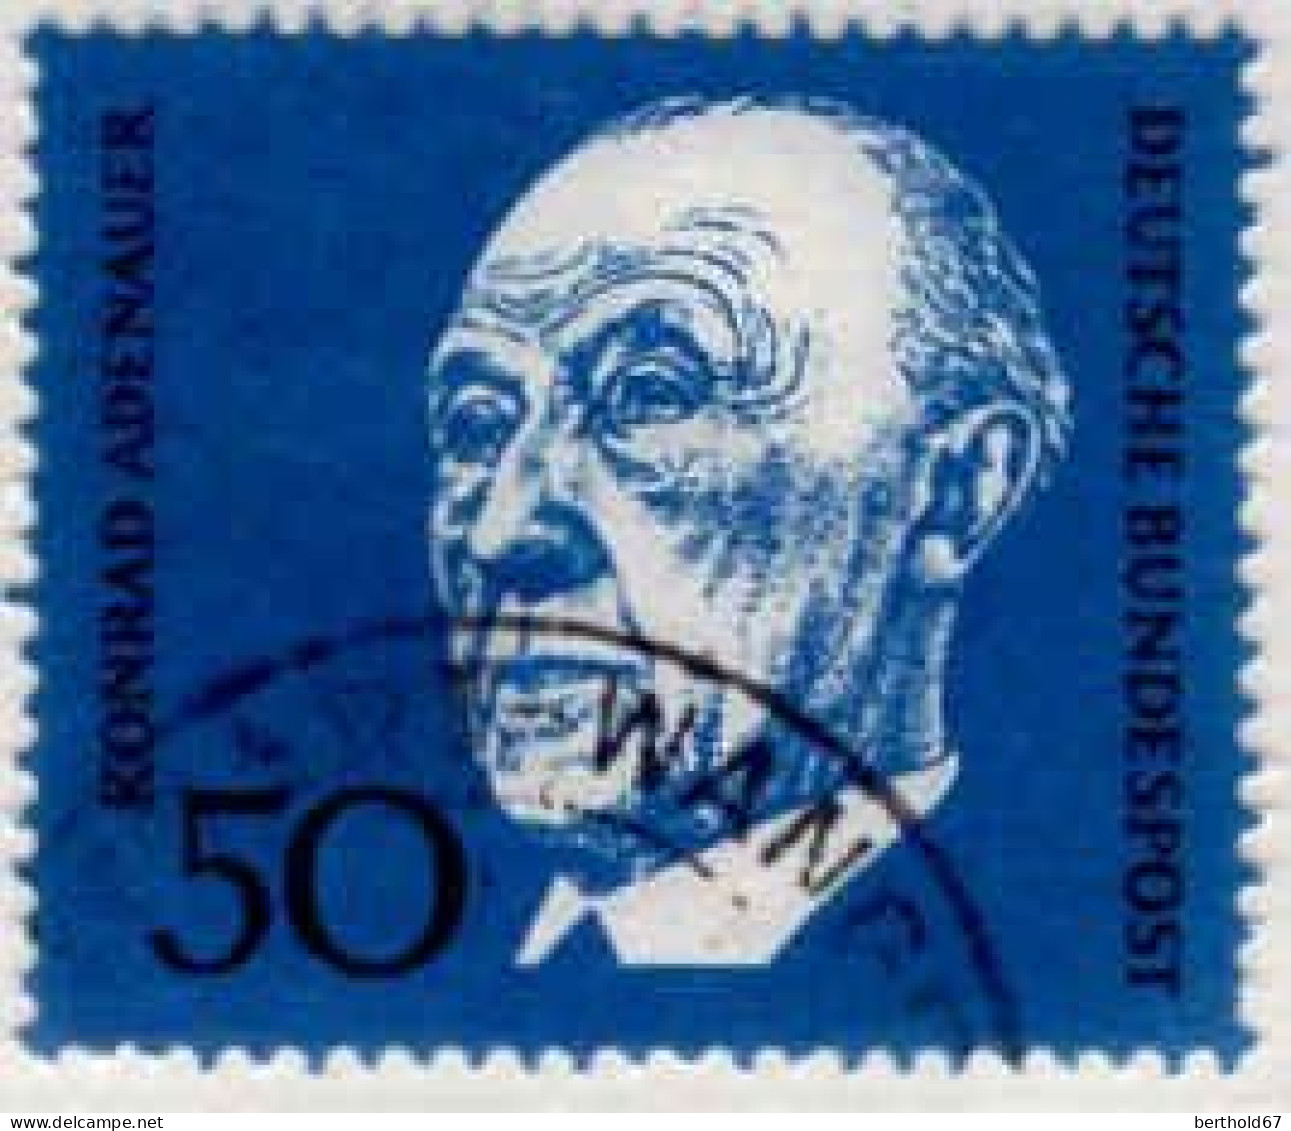 RFA Poste Obl Yv: 422 Mi:557 Konrad Adenauer (Beau Cachet Rond) - Used Stamps